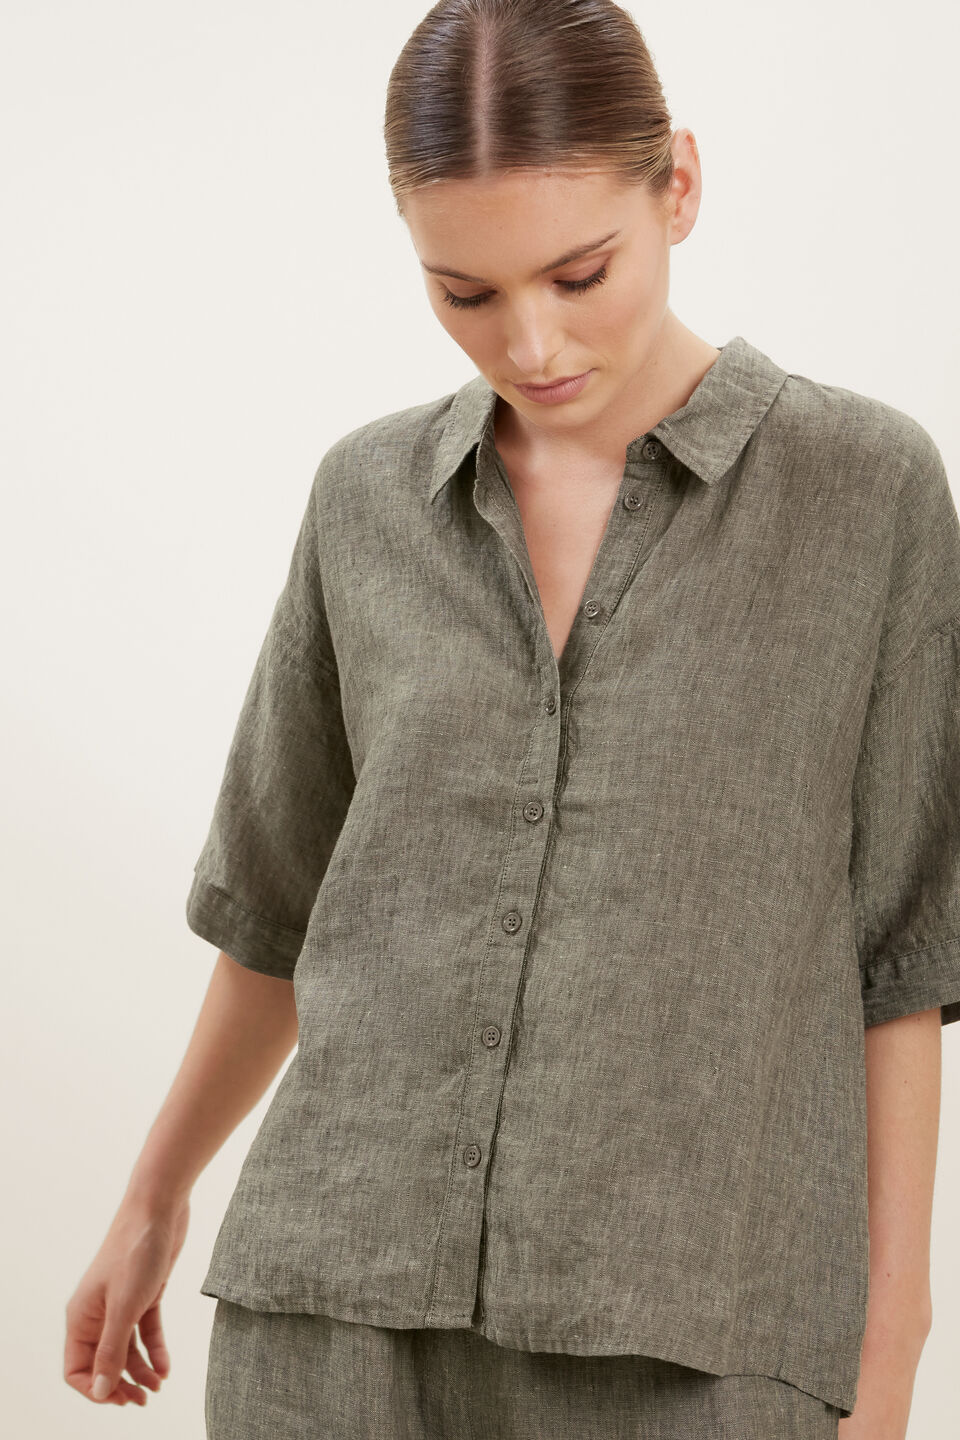 Short Sleeve Linen Shirt  Olive Khaki